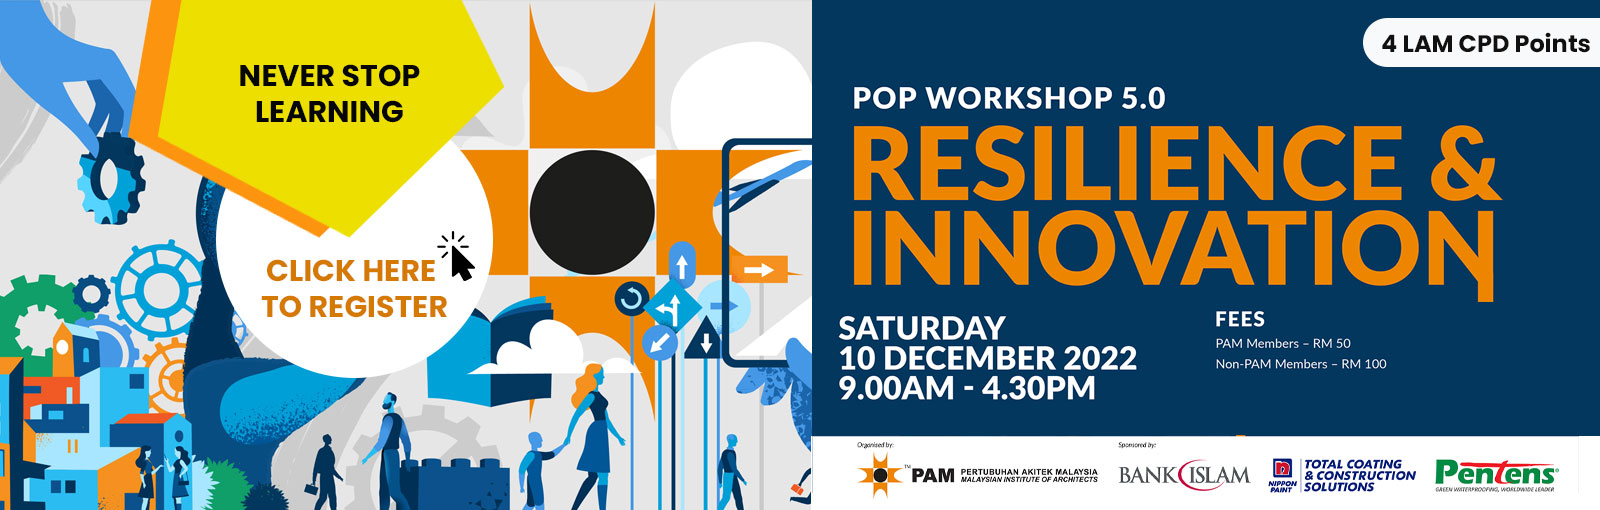 POP Workshop 5.0: RESILIENCE & INNOVATION